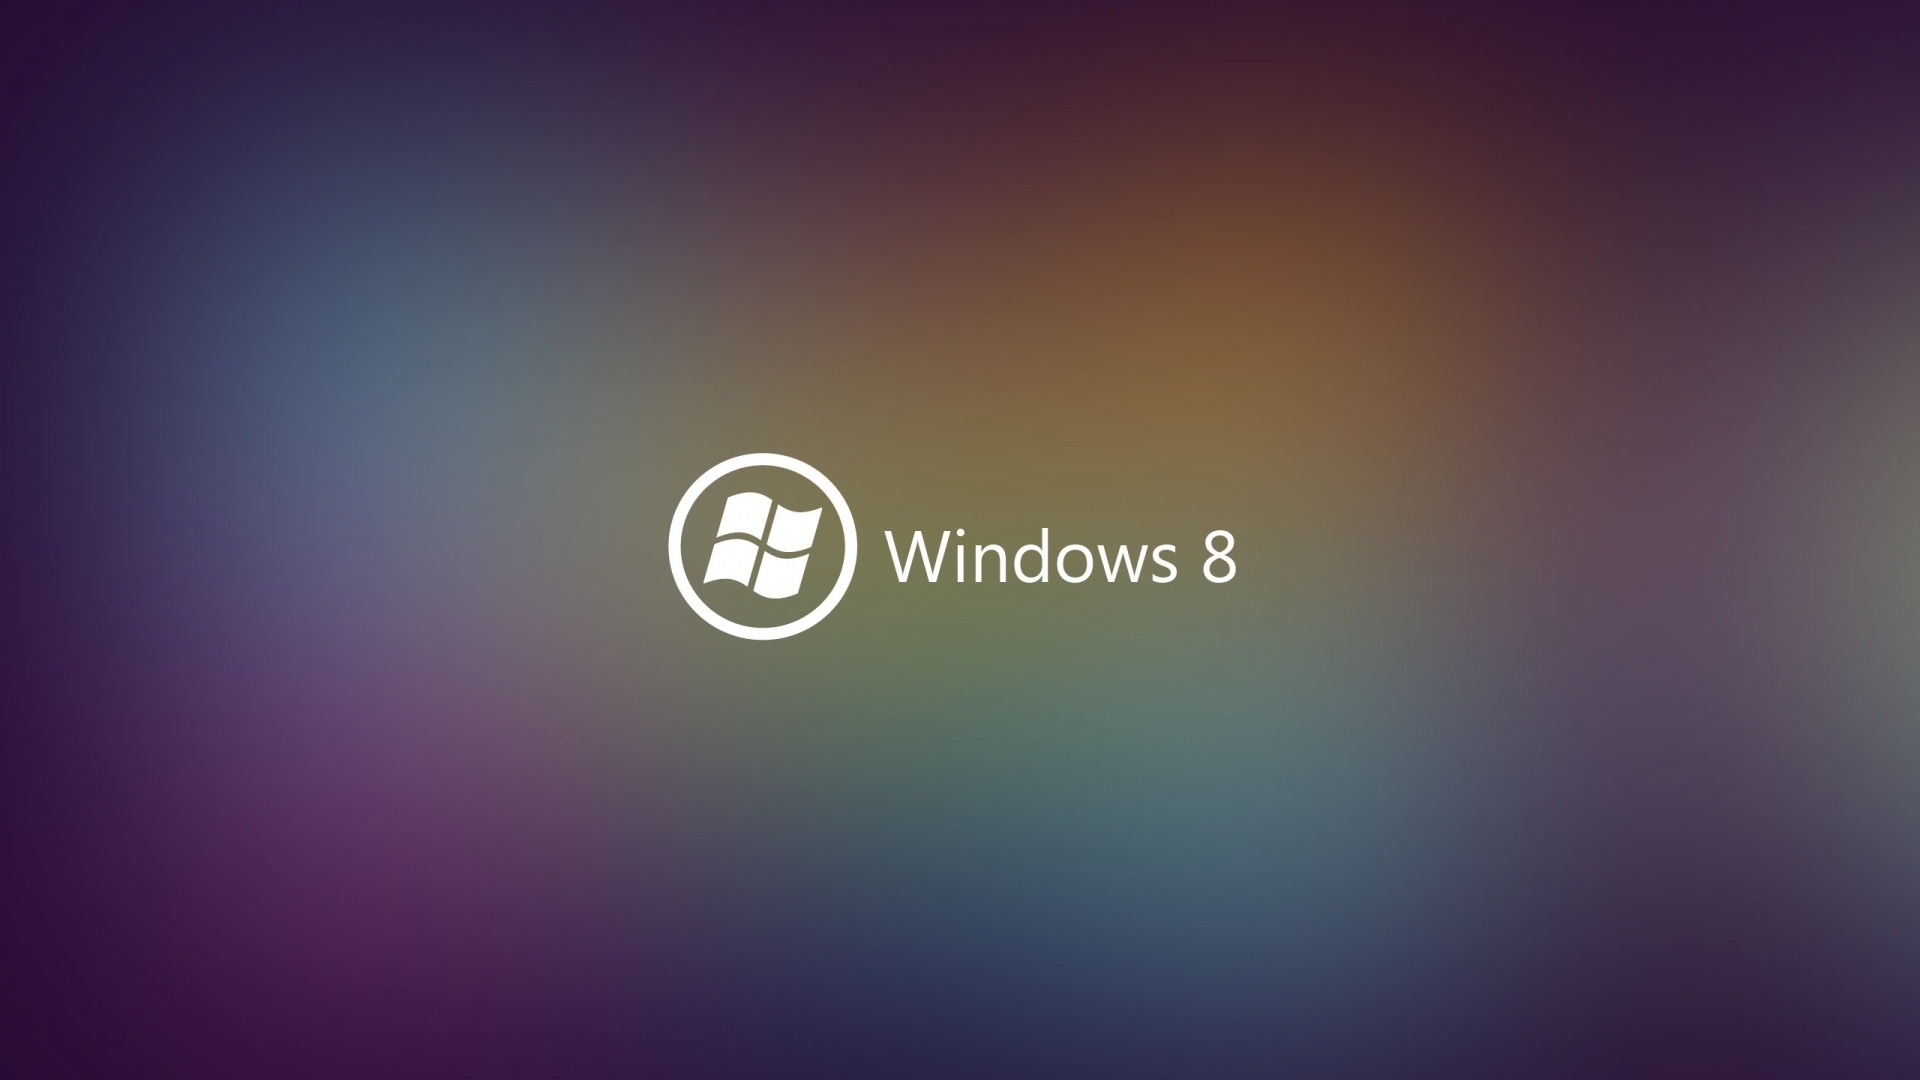 windows 8 wallpaper hd 1080p free download #13